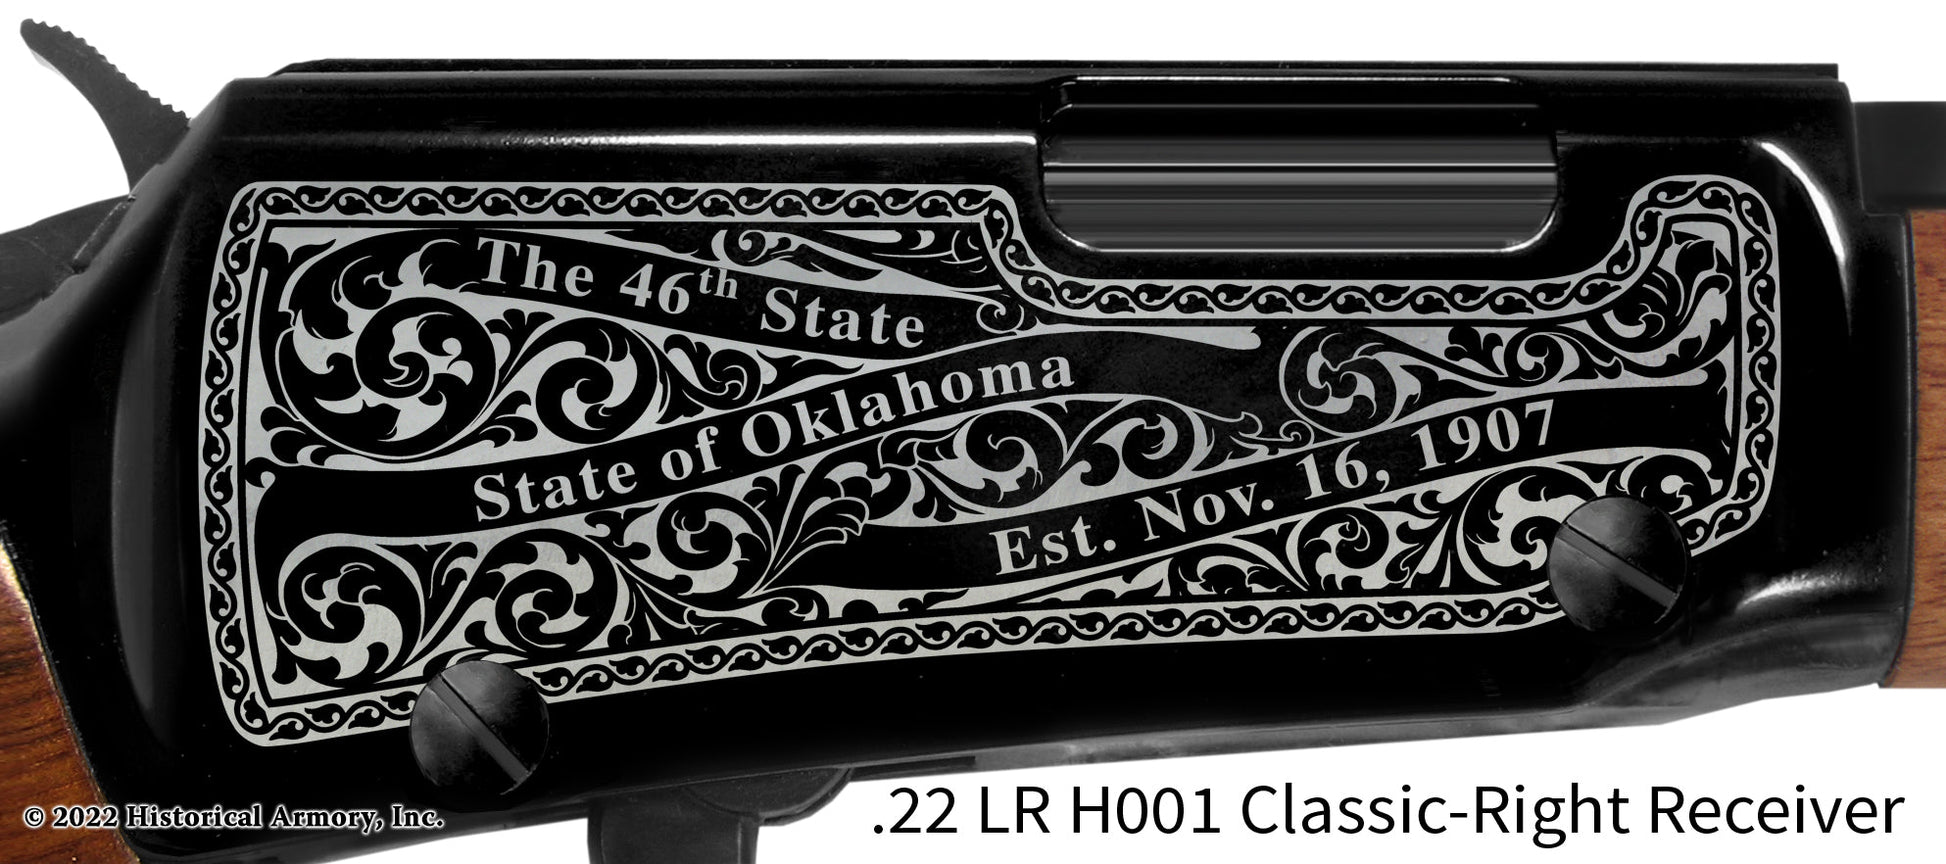 McIntosh County Oklahoma Engraved Henry H001 Rifle